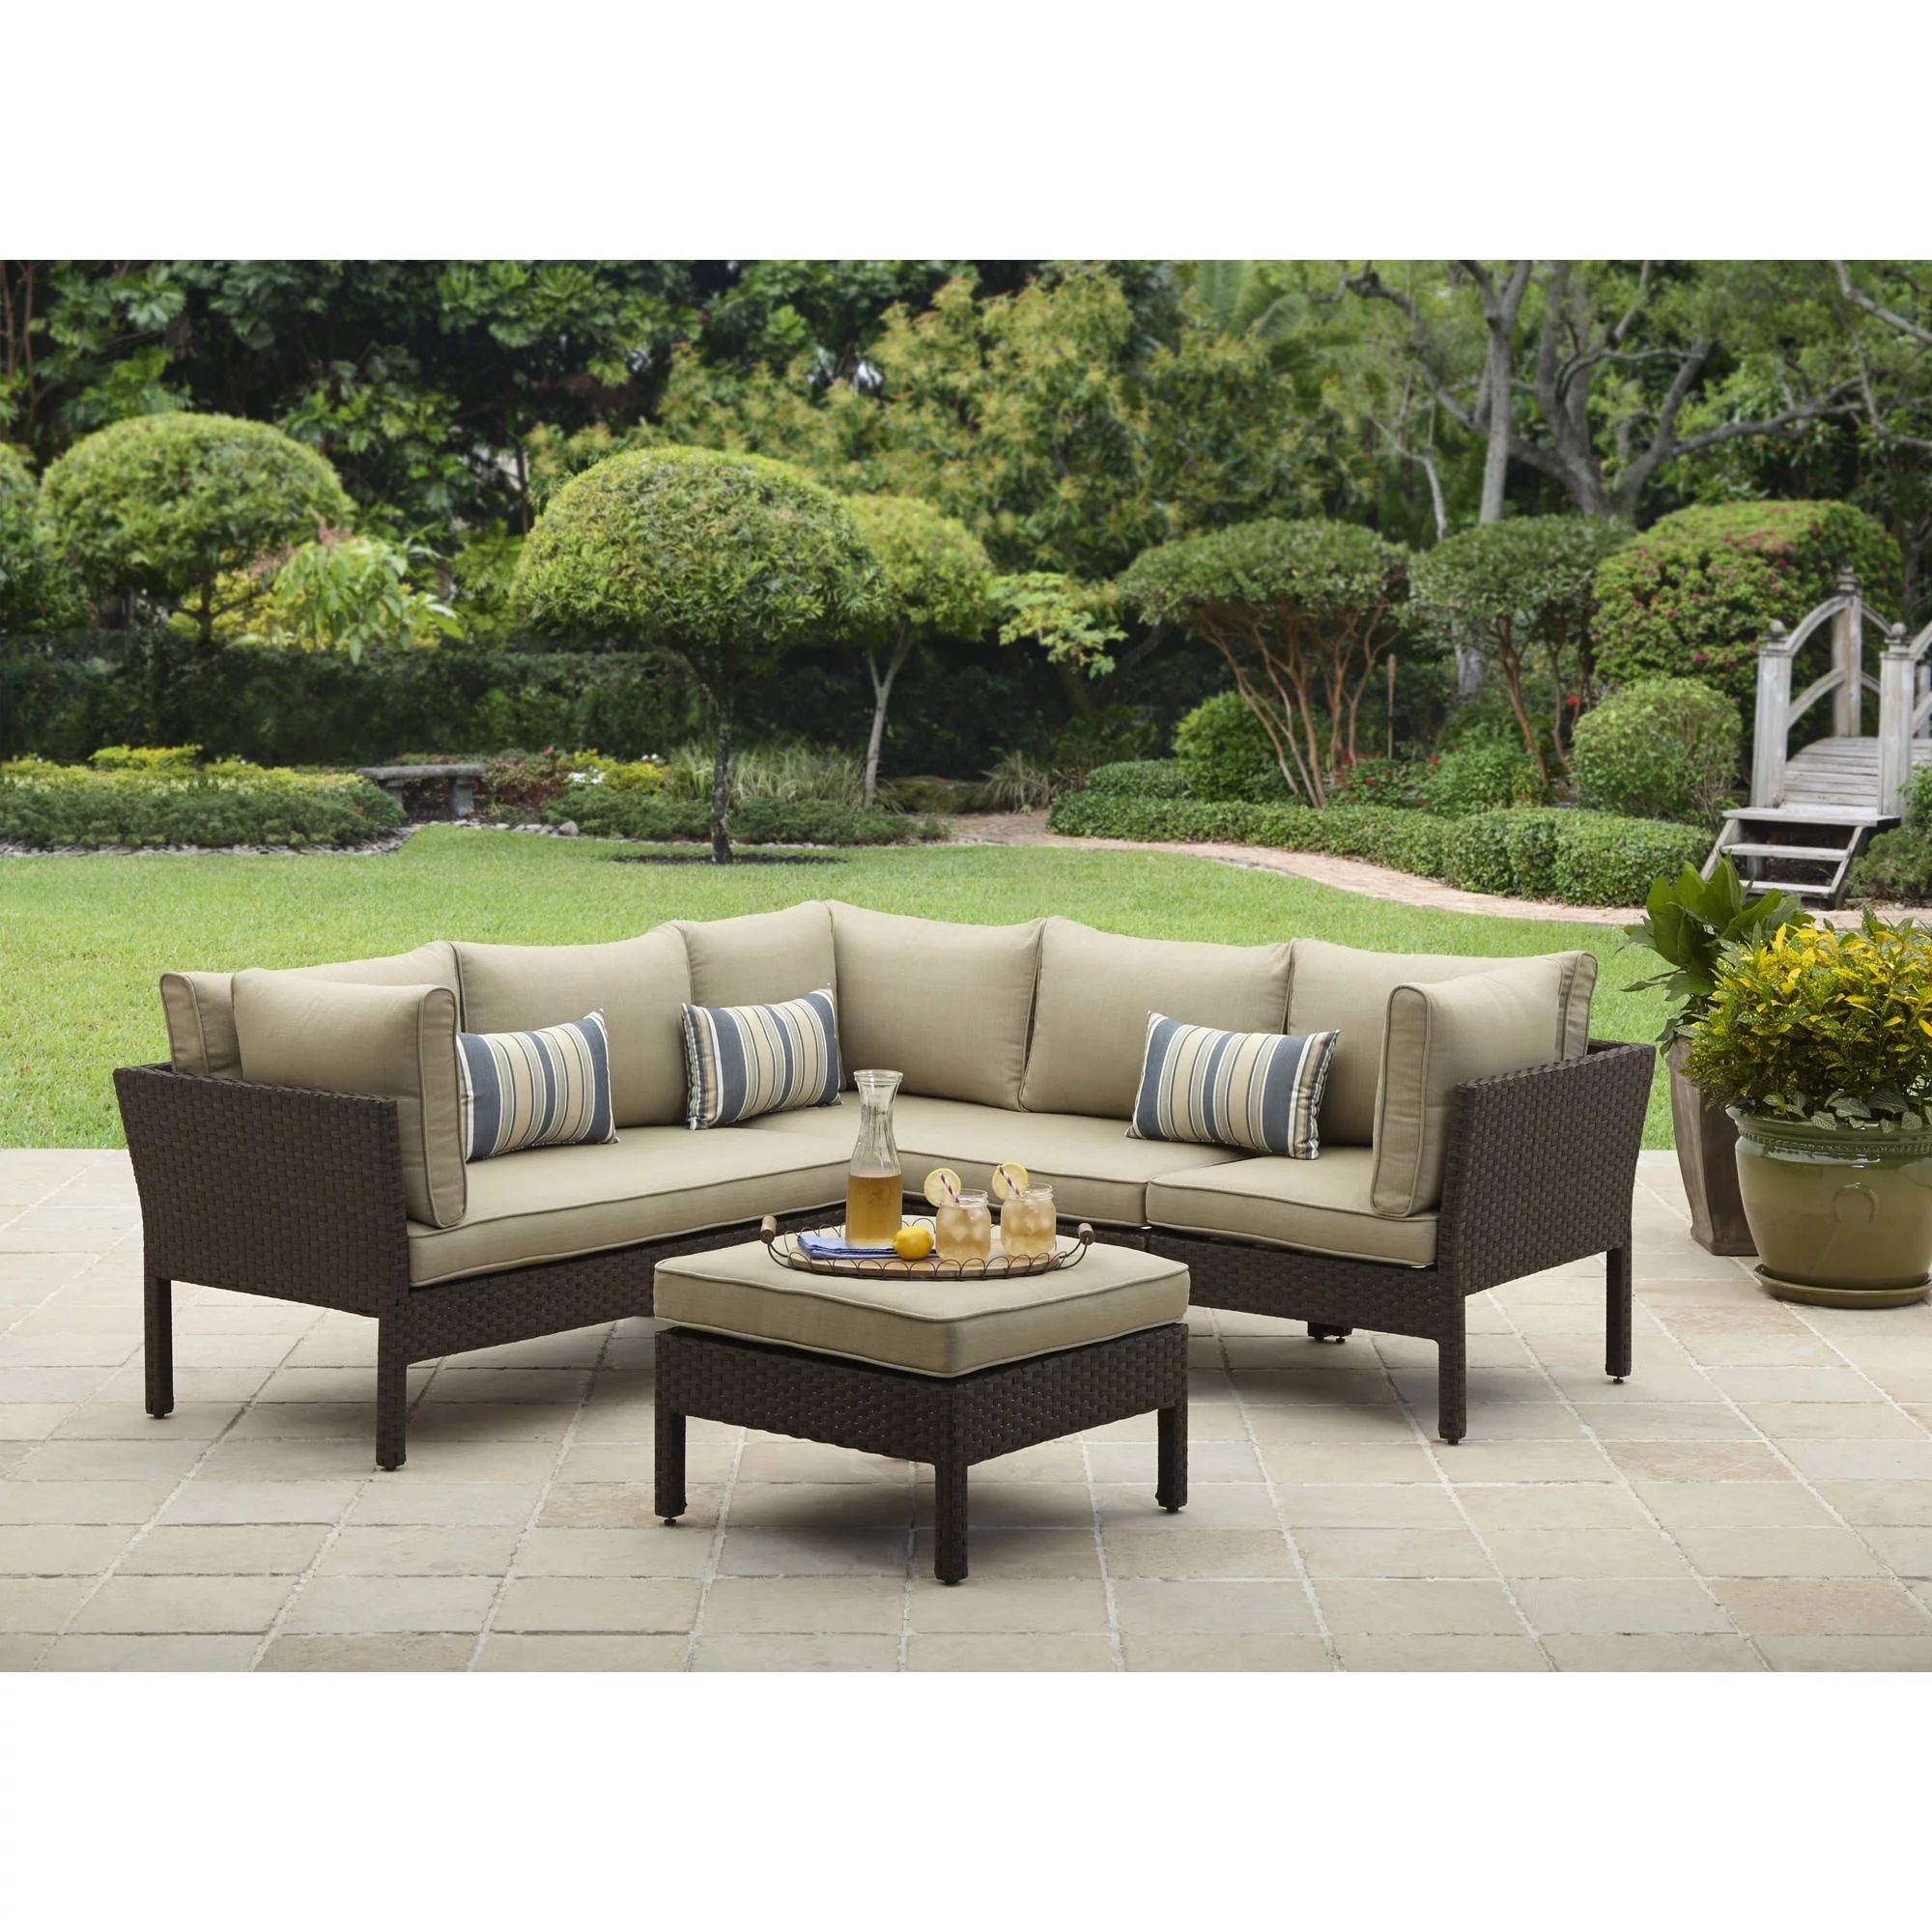 Better Homes & Gardens Avila Beach 4-Piece Wicker Patio Furniture Sectional Set, with Pillows | Walmart (US)